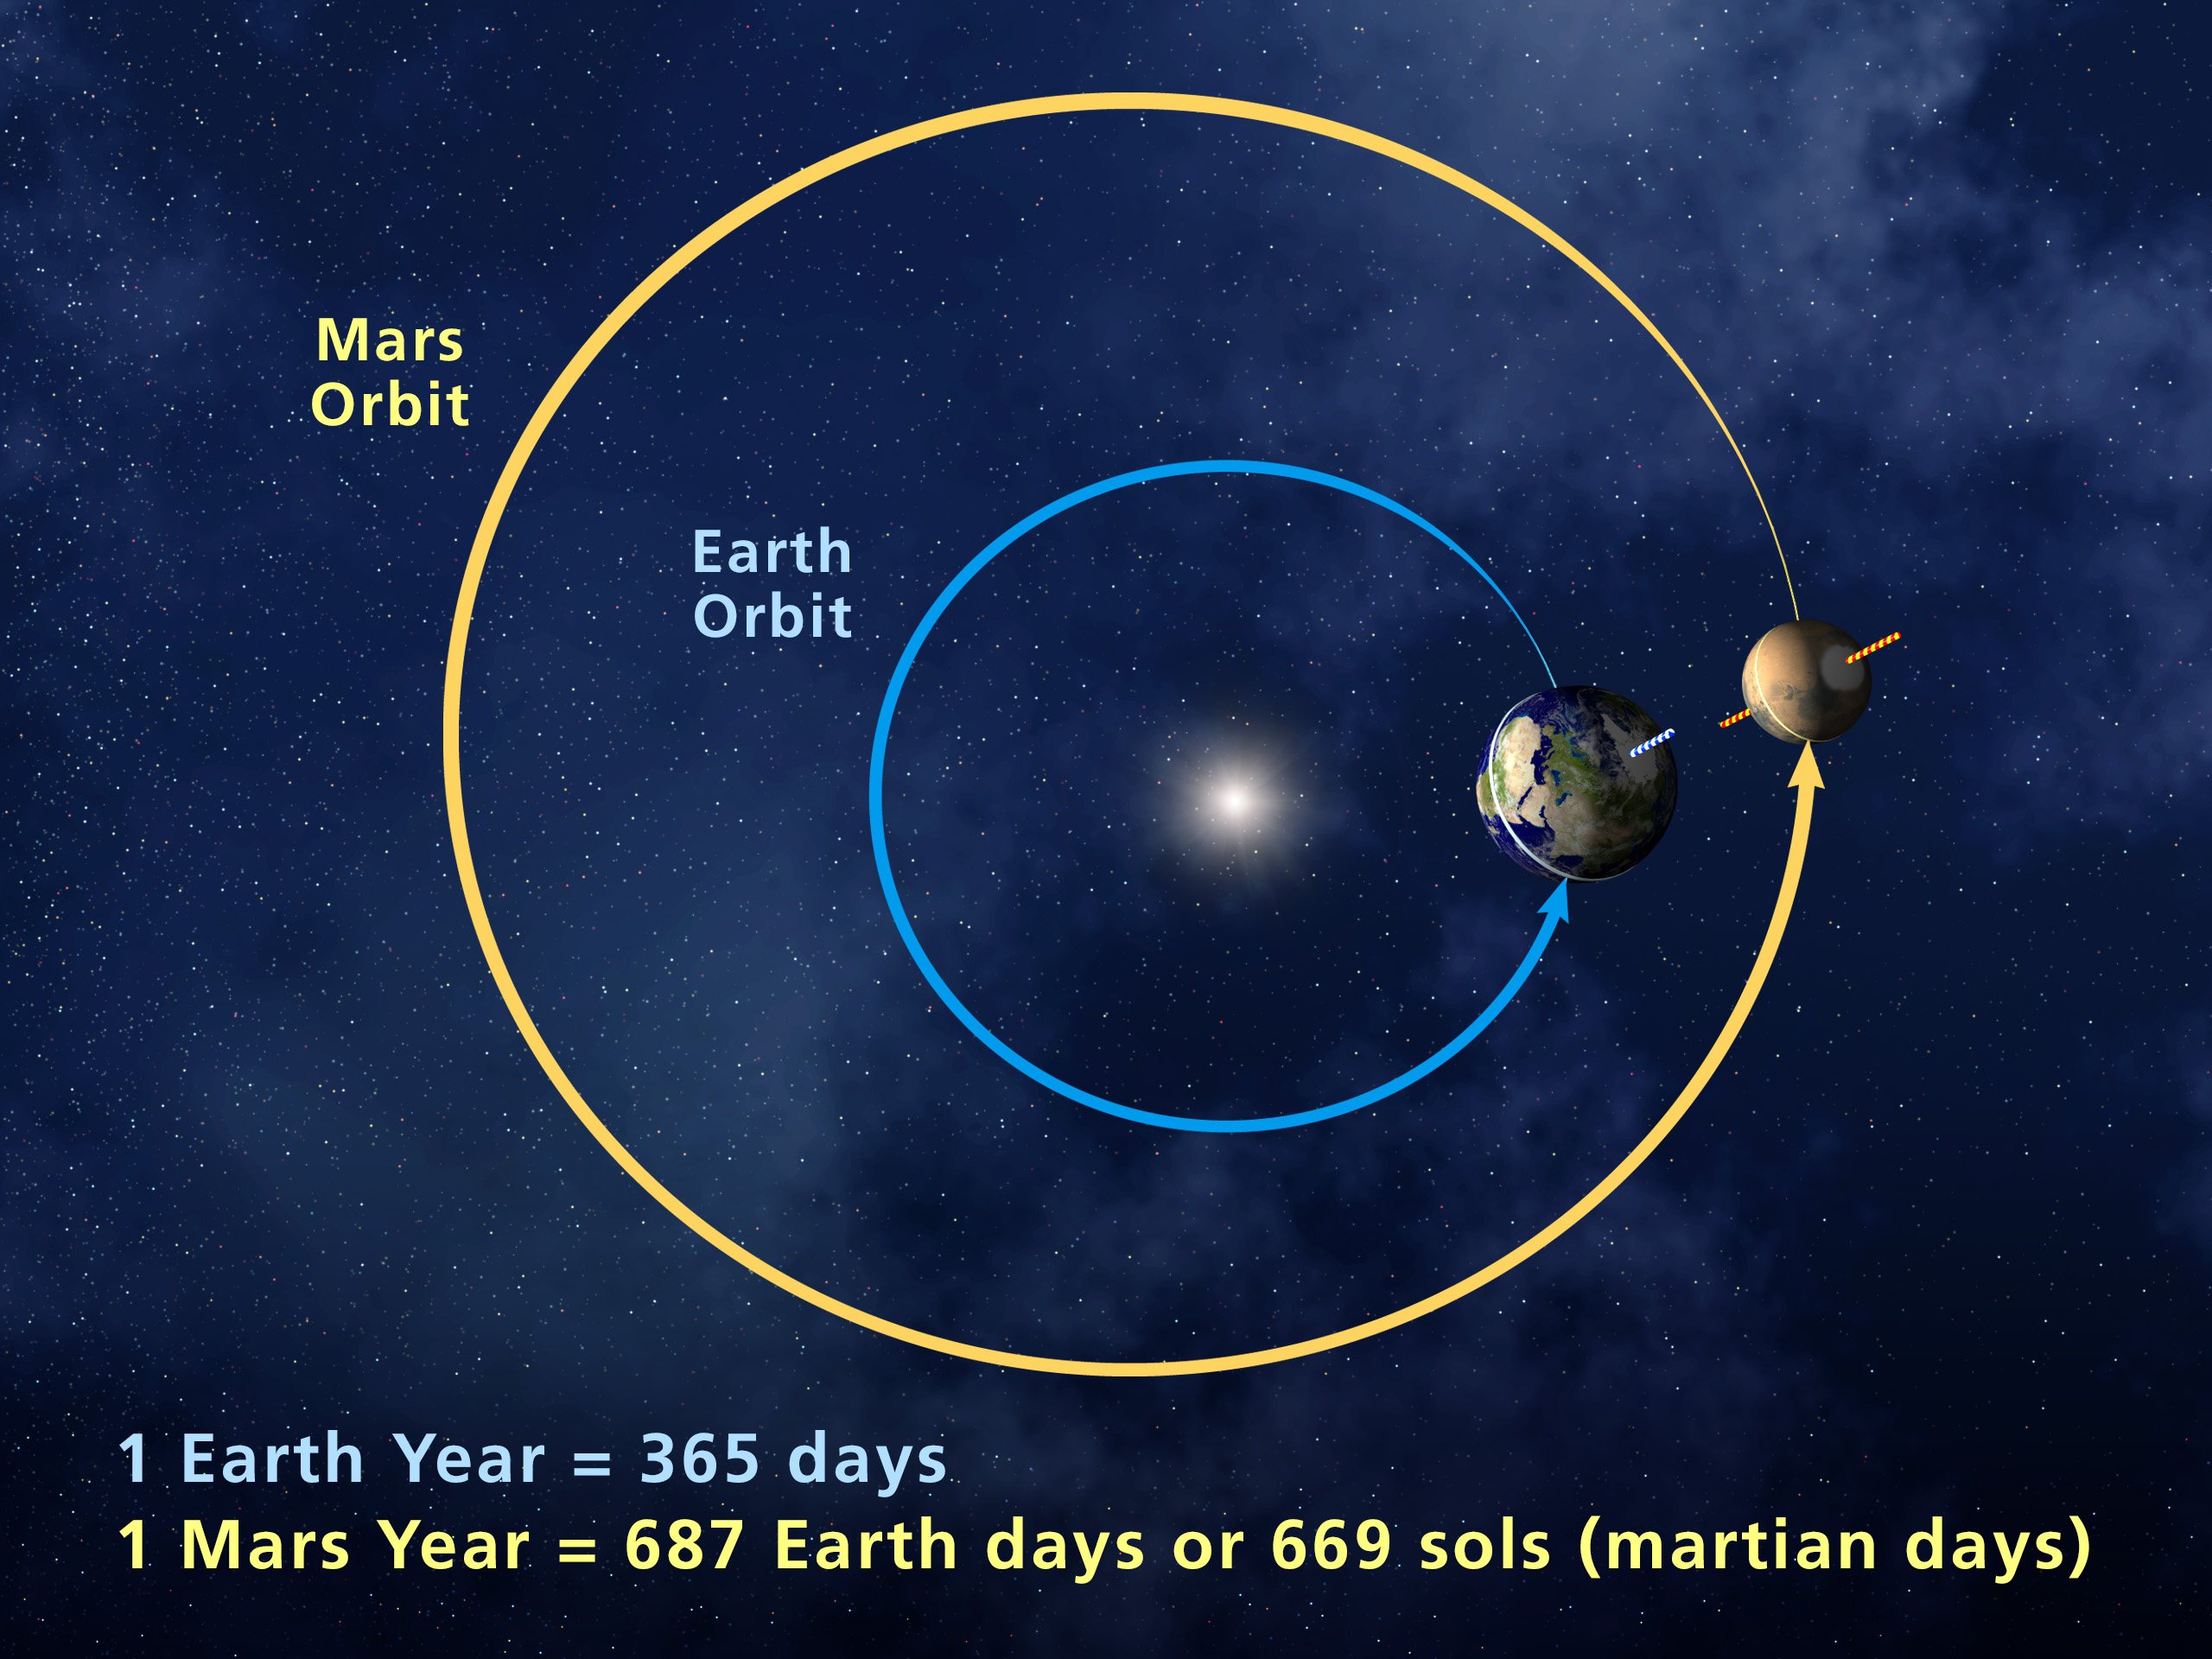 Martian Year Mars Exploration Program